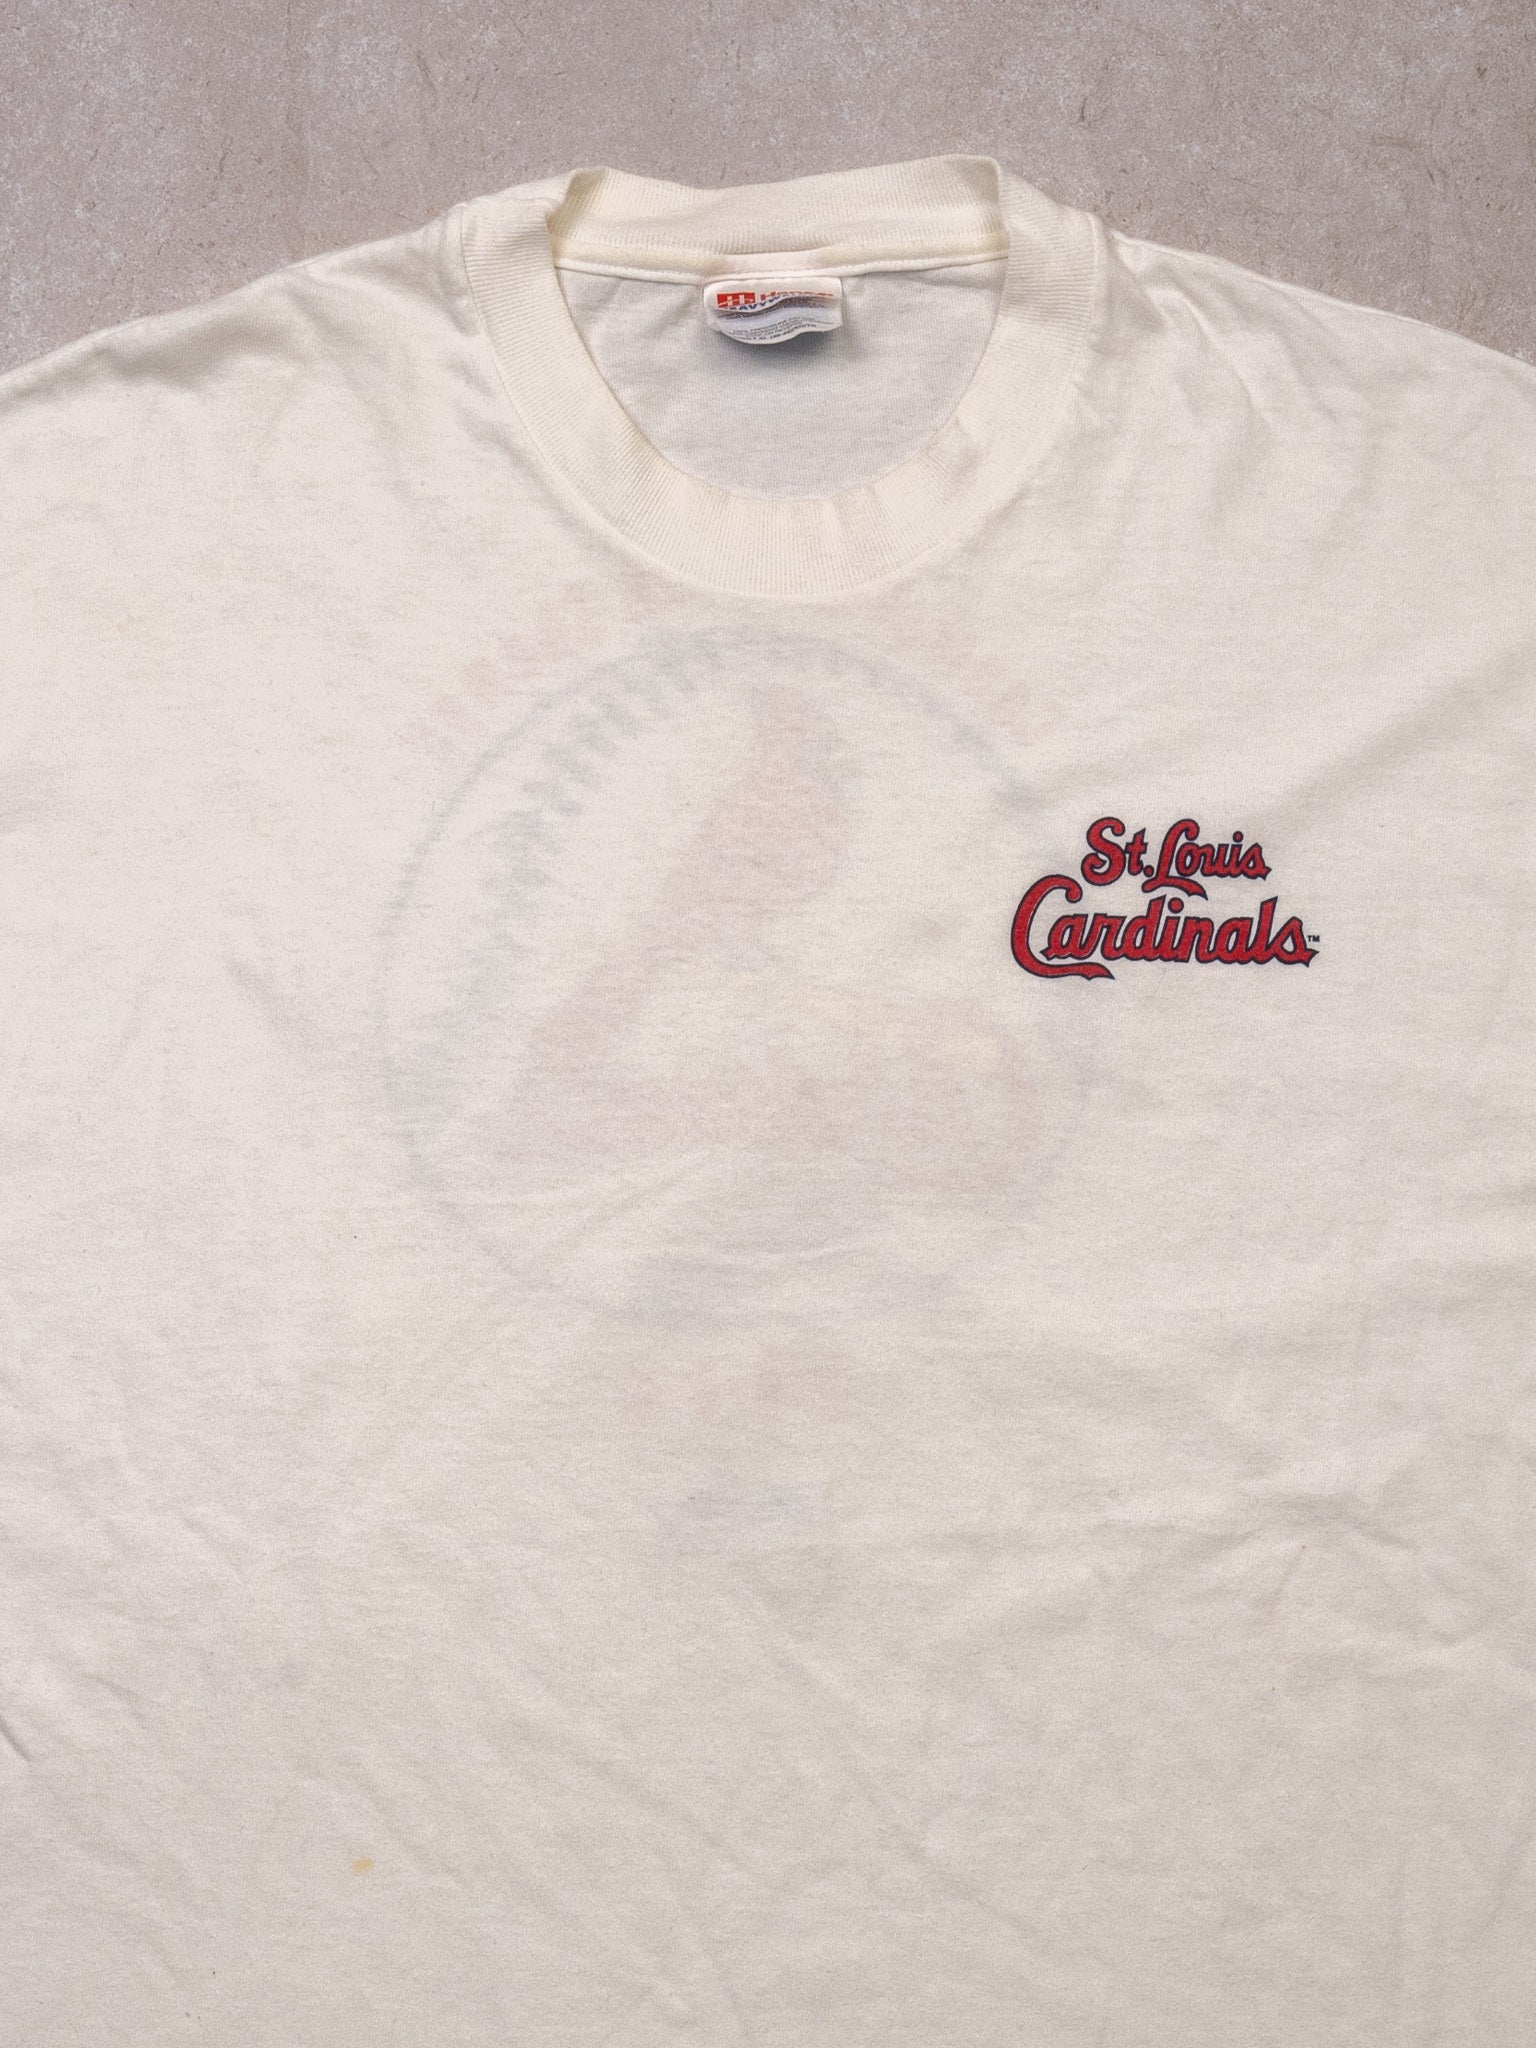 Vintage '00 White St Louis Cardinals Central Division Champs Tee (L)